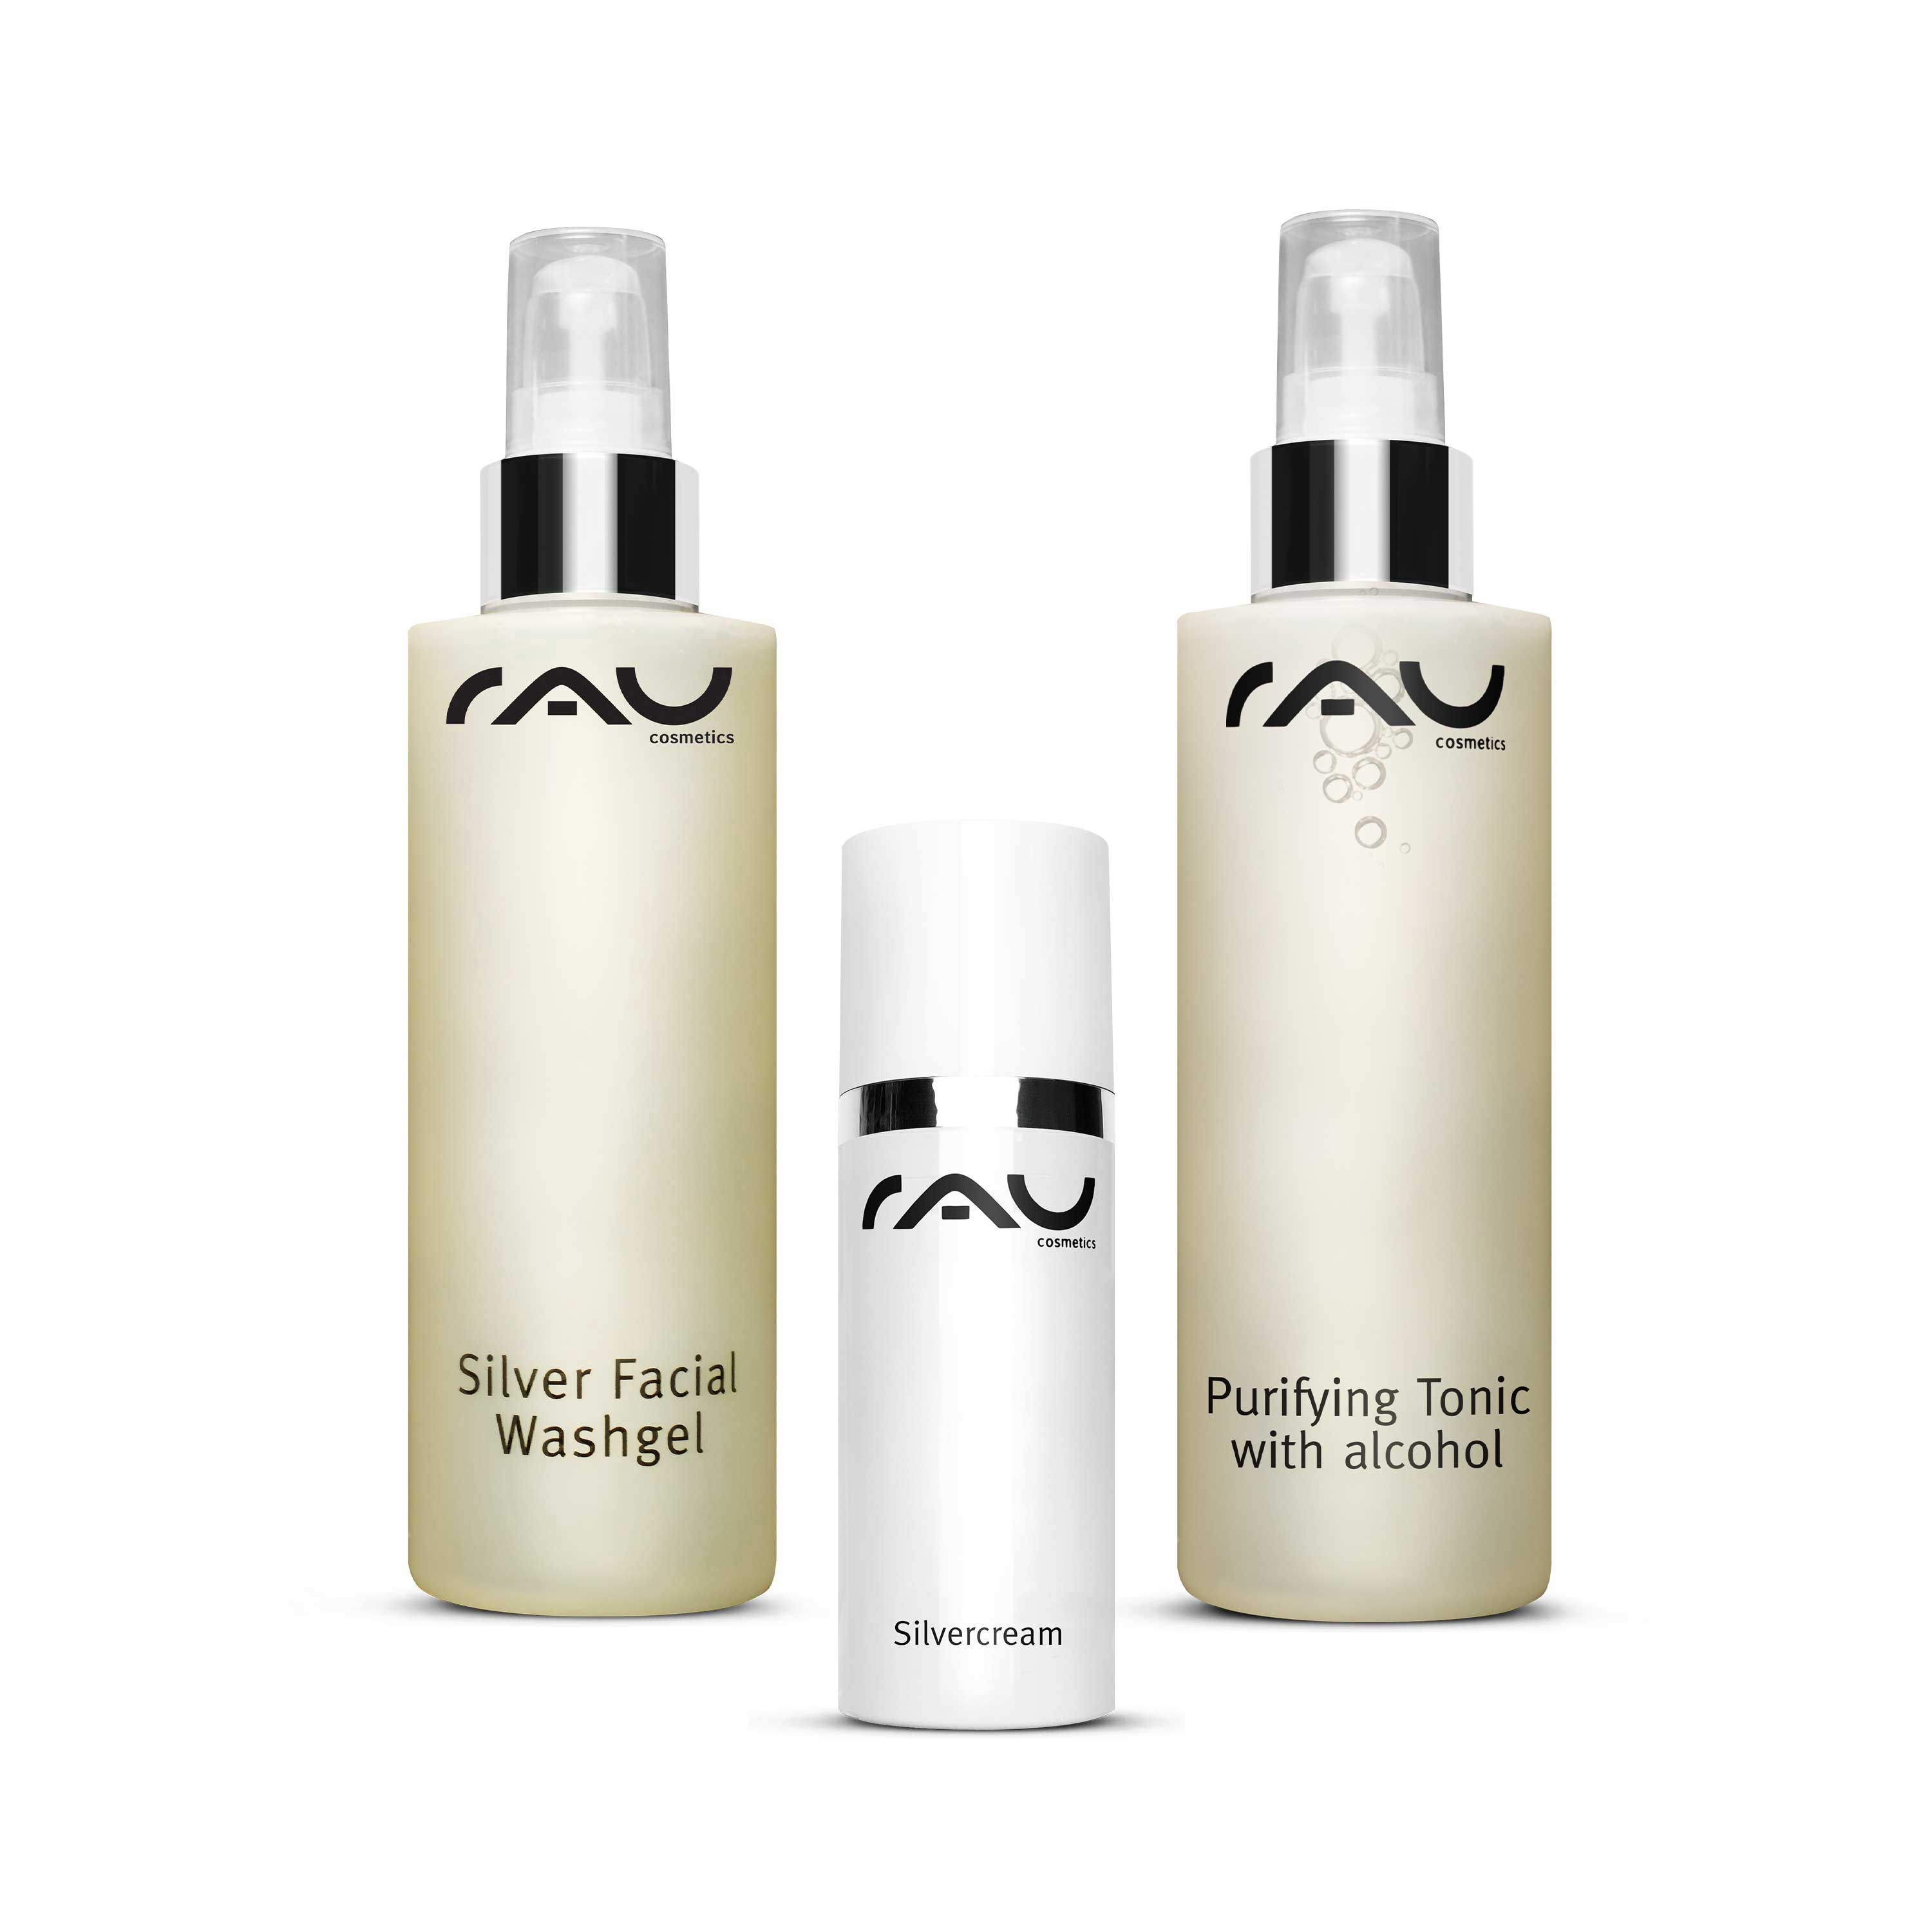 RAU Cosmetics 3er Set Purifying Tonic Tonic Silver Facial Washgel Silvercream unreine Haut Wirkstoffkosmetik Onlineshop